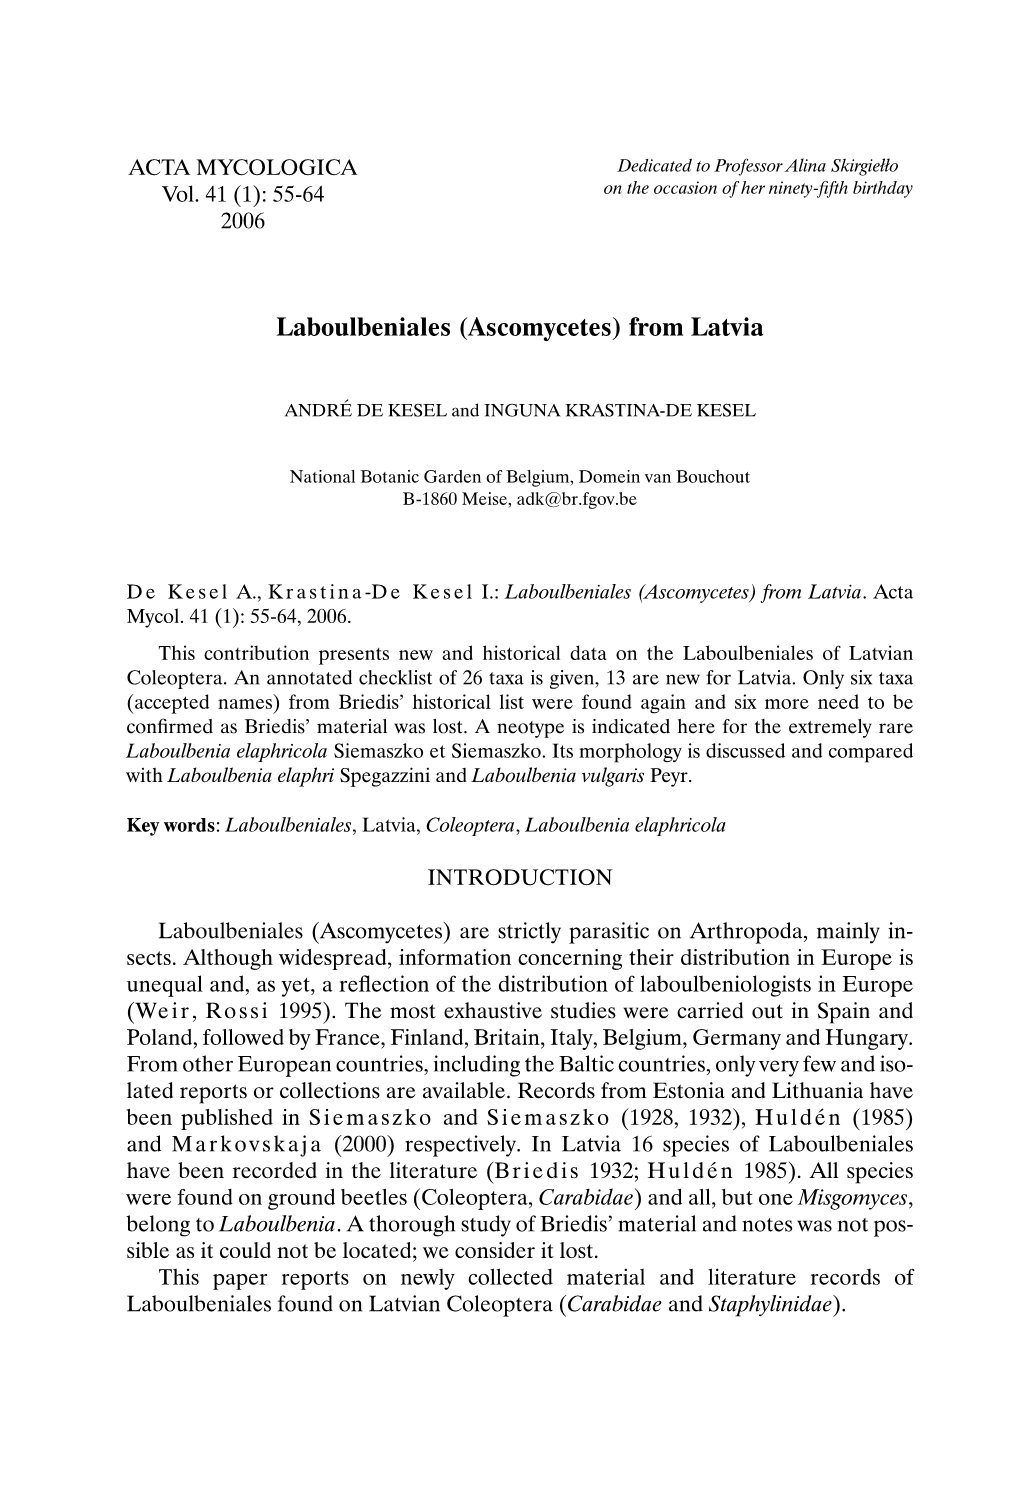 Laboulbeniales (Ascomycetes) from Latvia